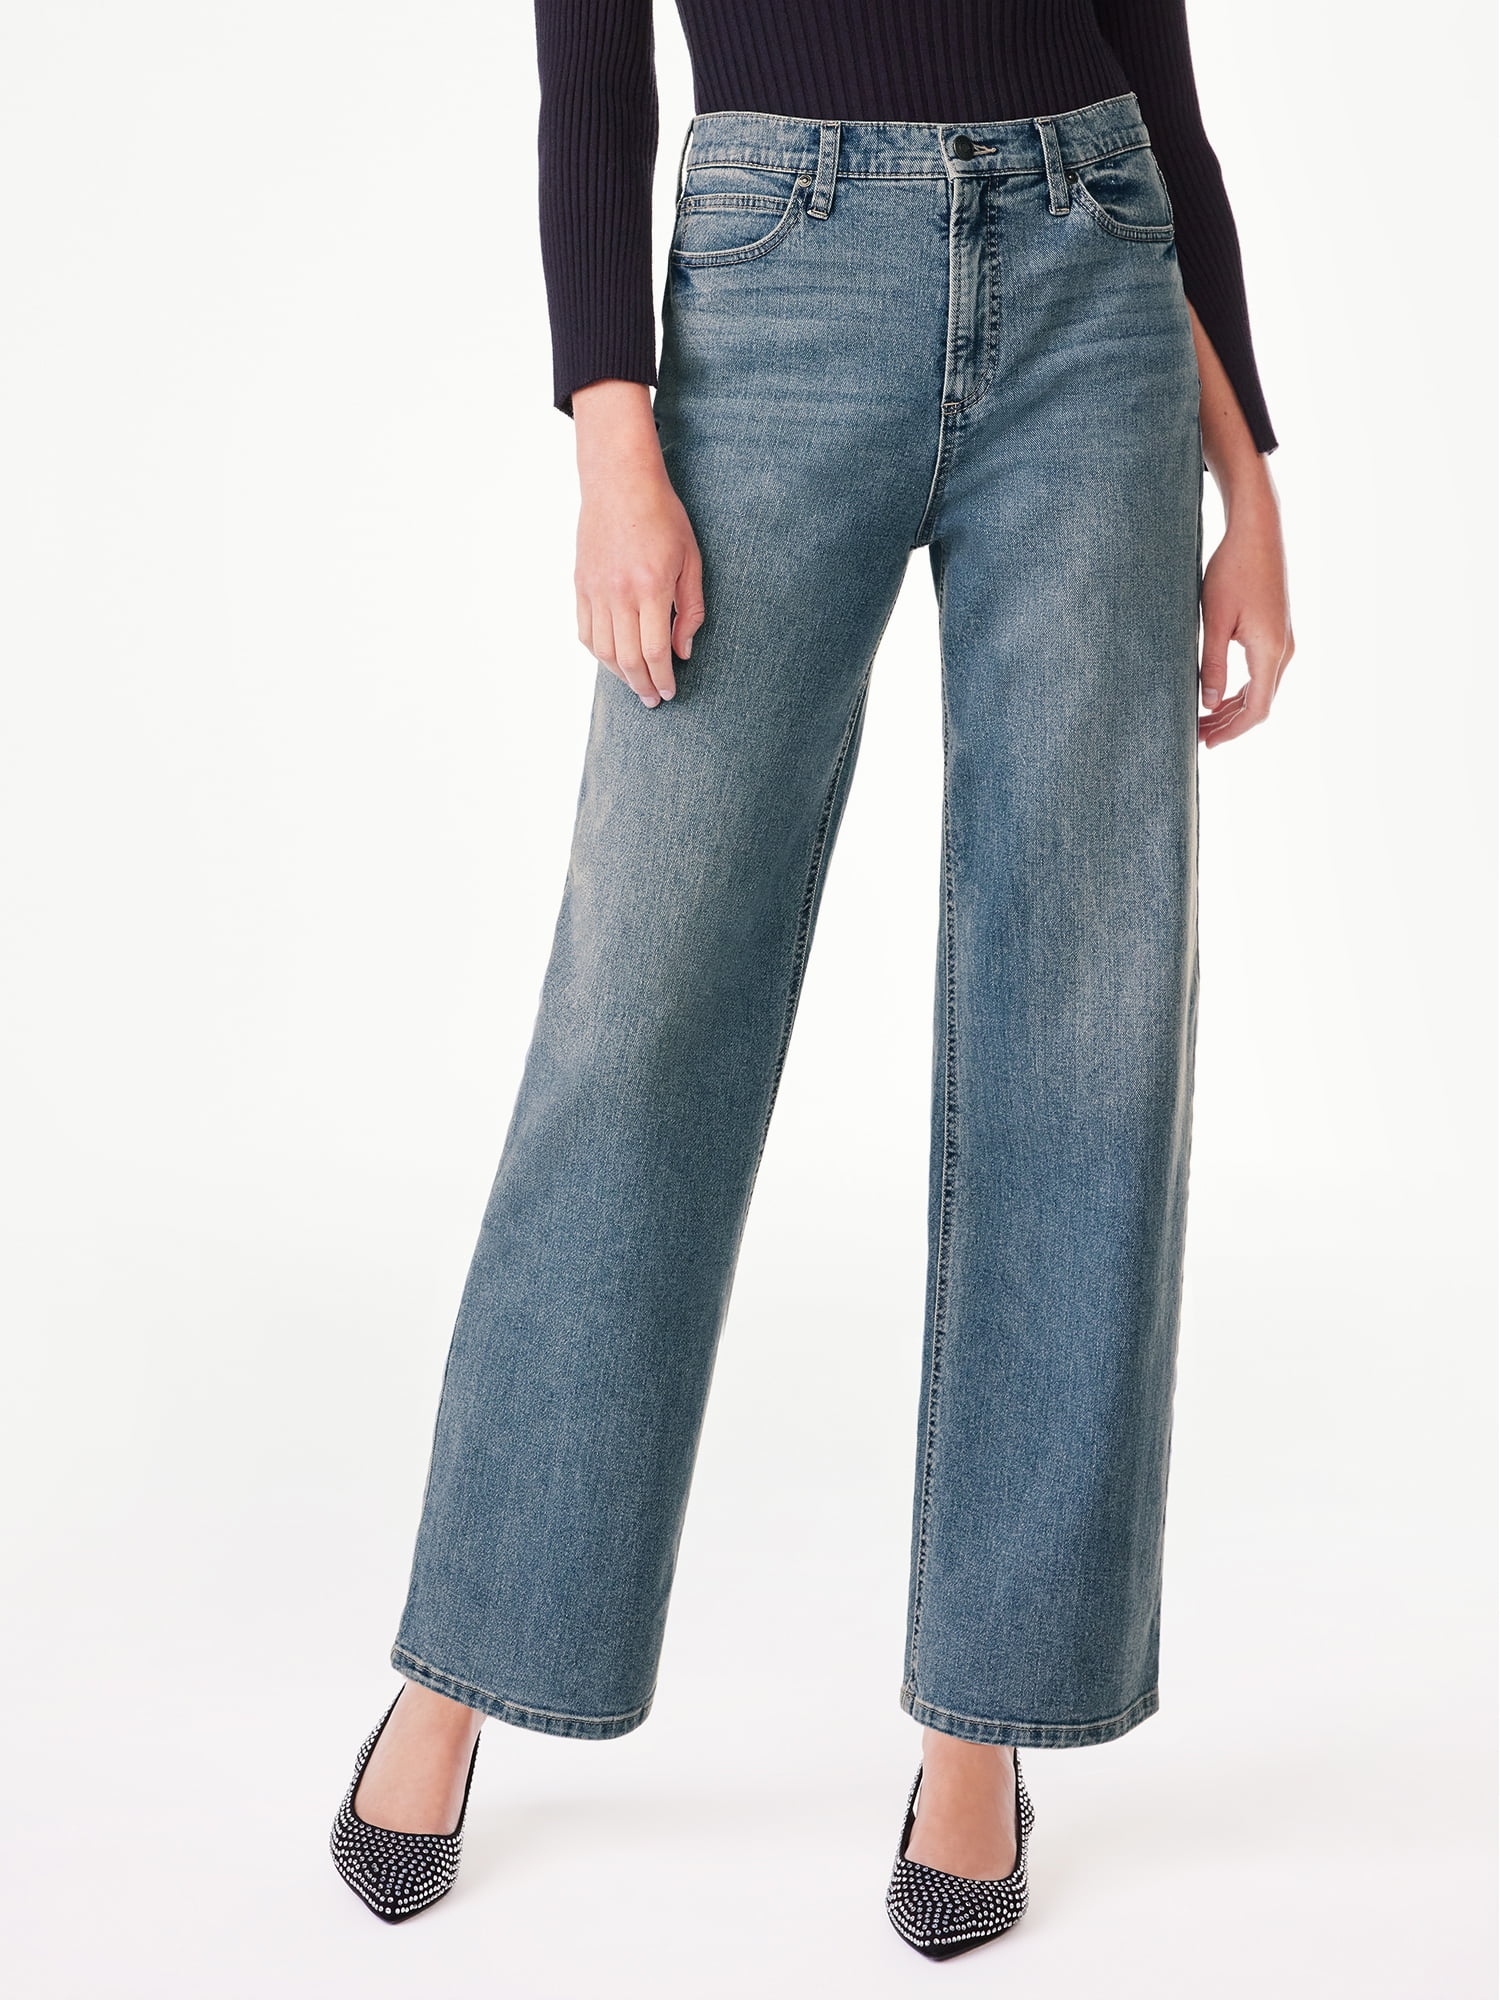 Scoop Women's Slouchy Boyfriend High Rise Jeans, Sizes 0-18 - Walmart.com